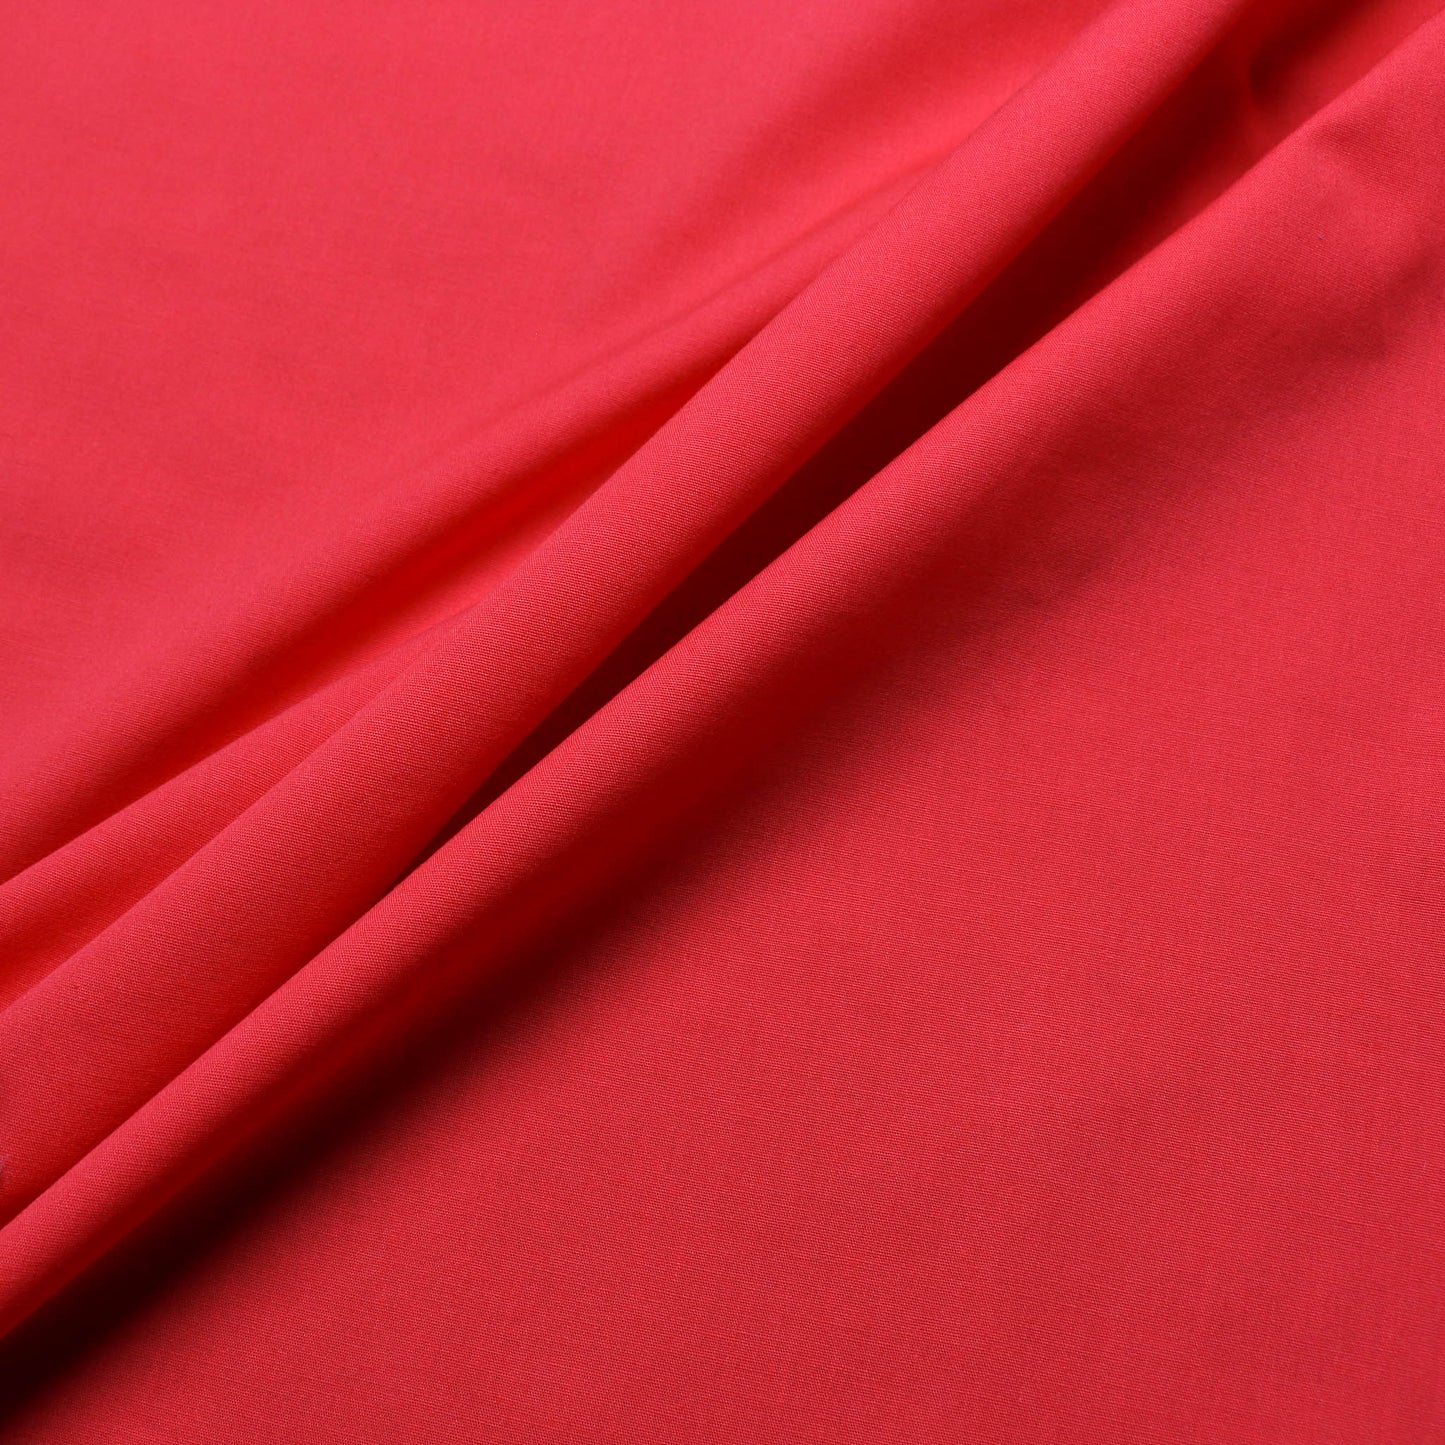 plain red stretch cotton dressmaking fabric